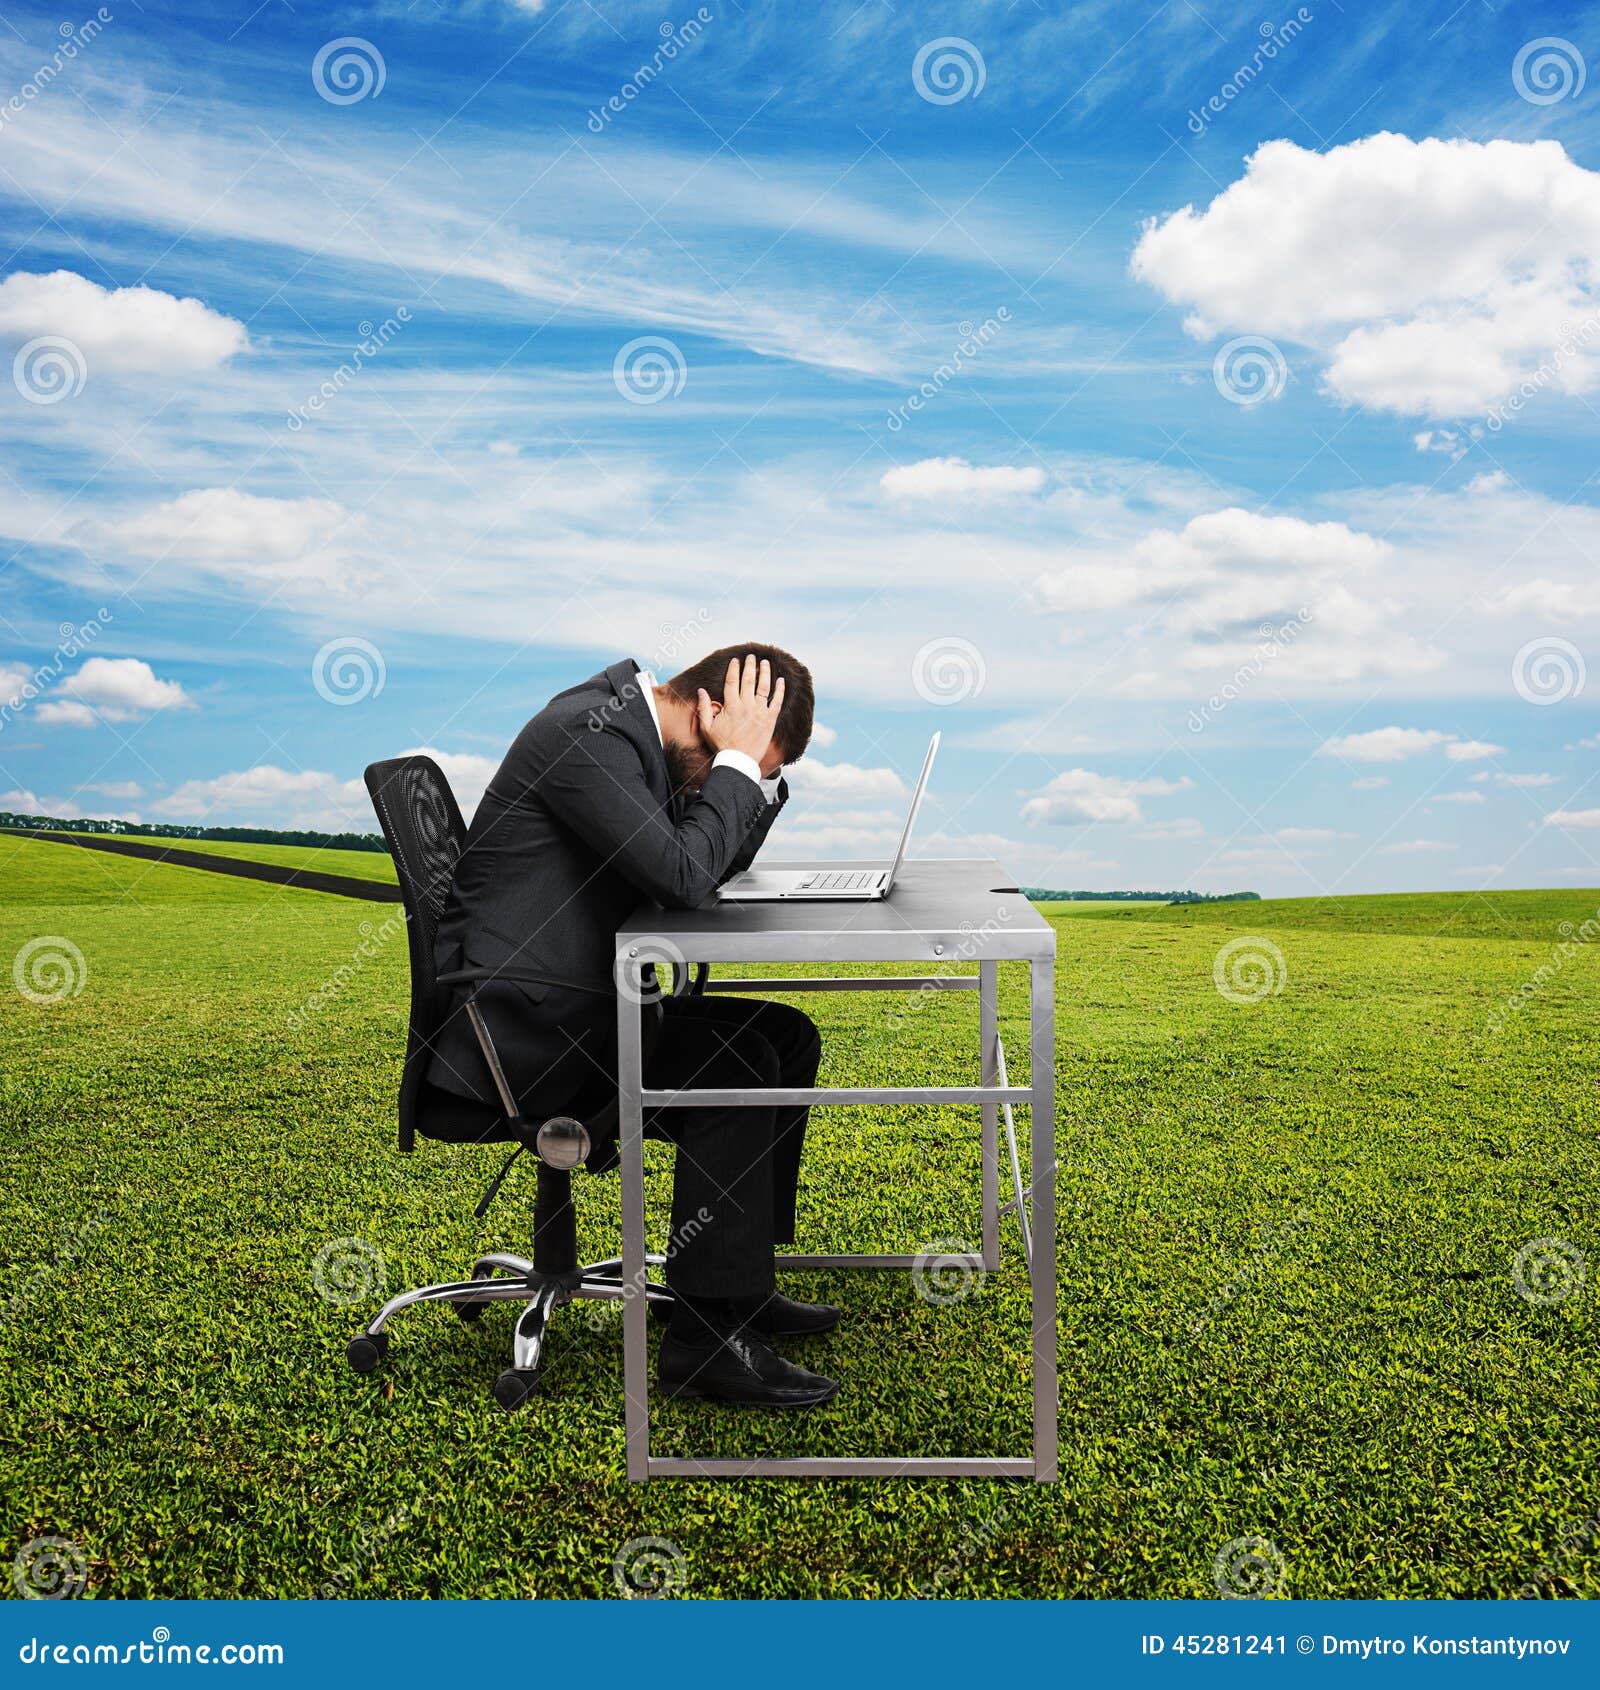 sad-man-sitting-table-laptop-businessman-covering-his-head-photo-outdoor-45281241.jpg